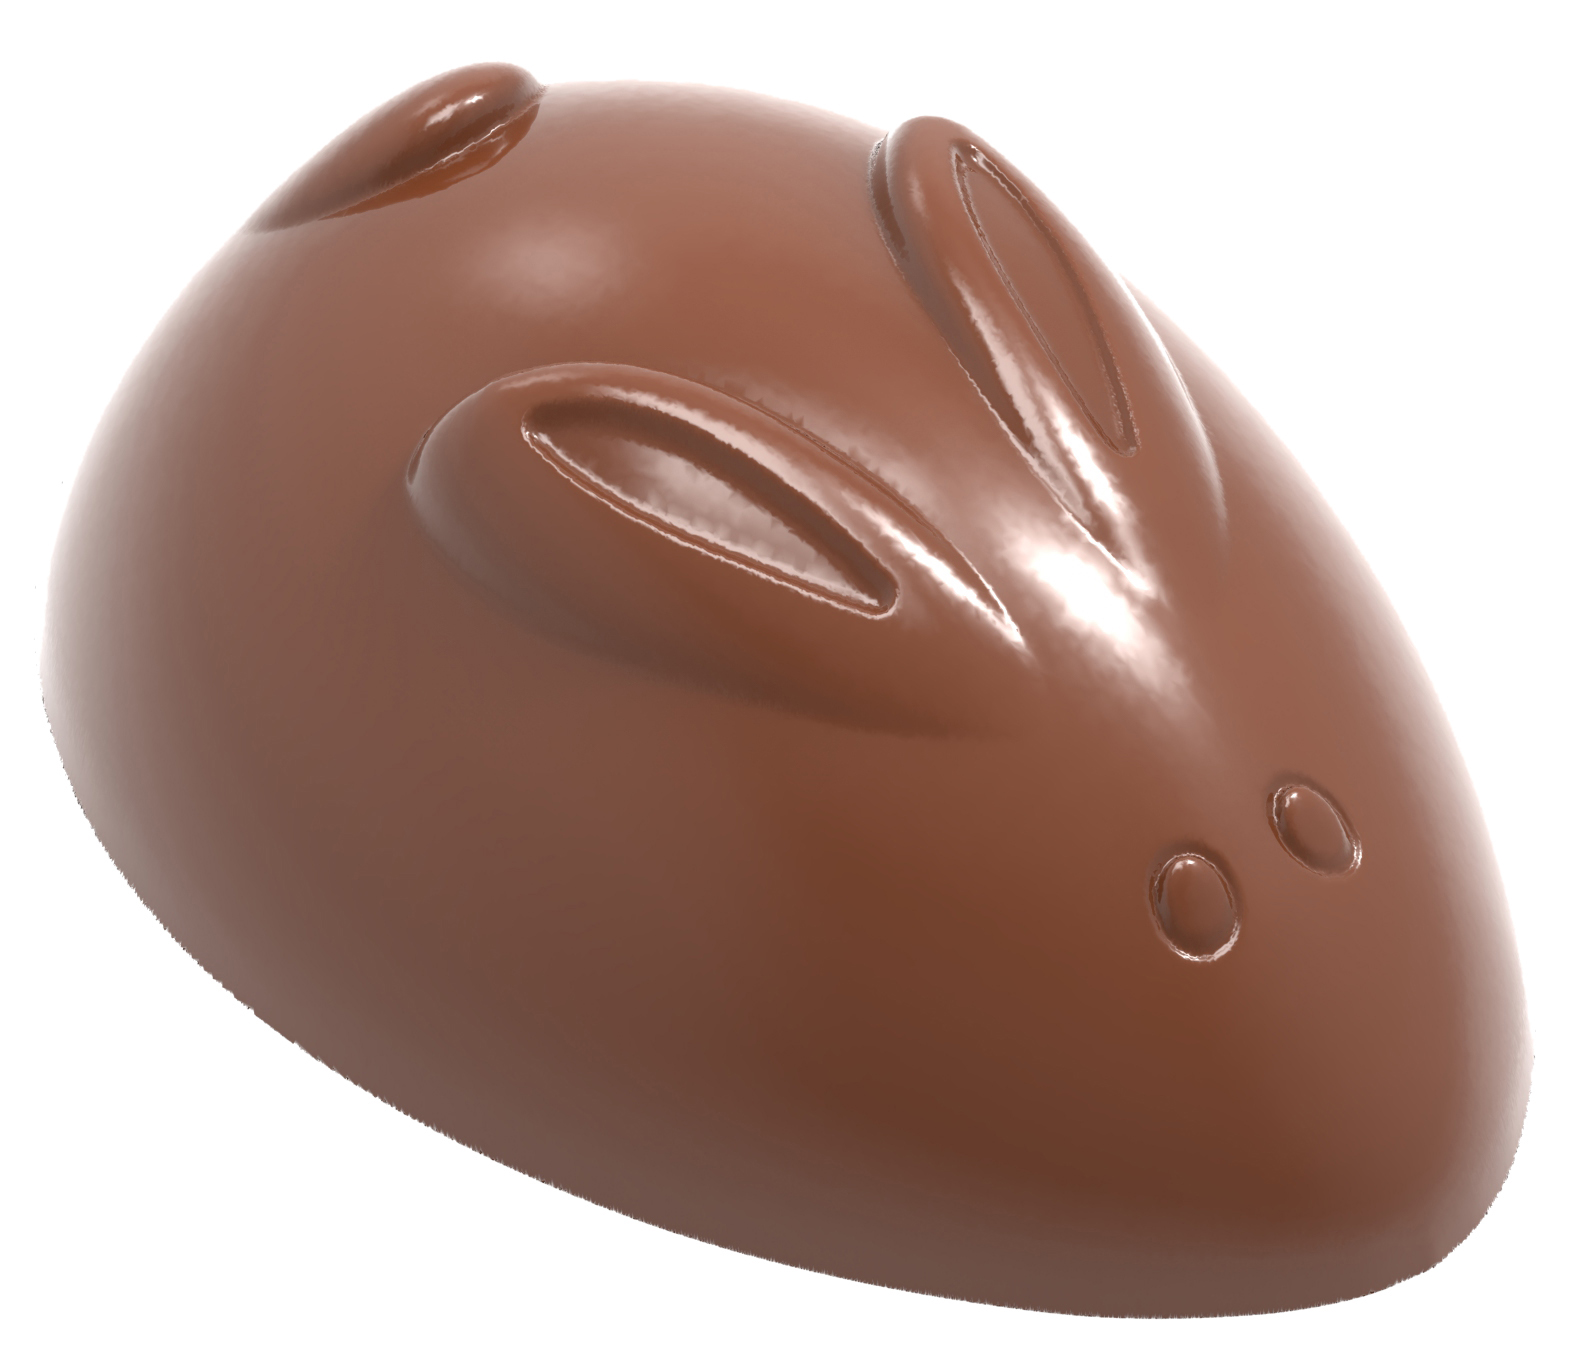 Professionel chokoladeform i polycarbonat - Kanin Chokoladeform CW1875